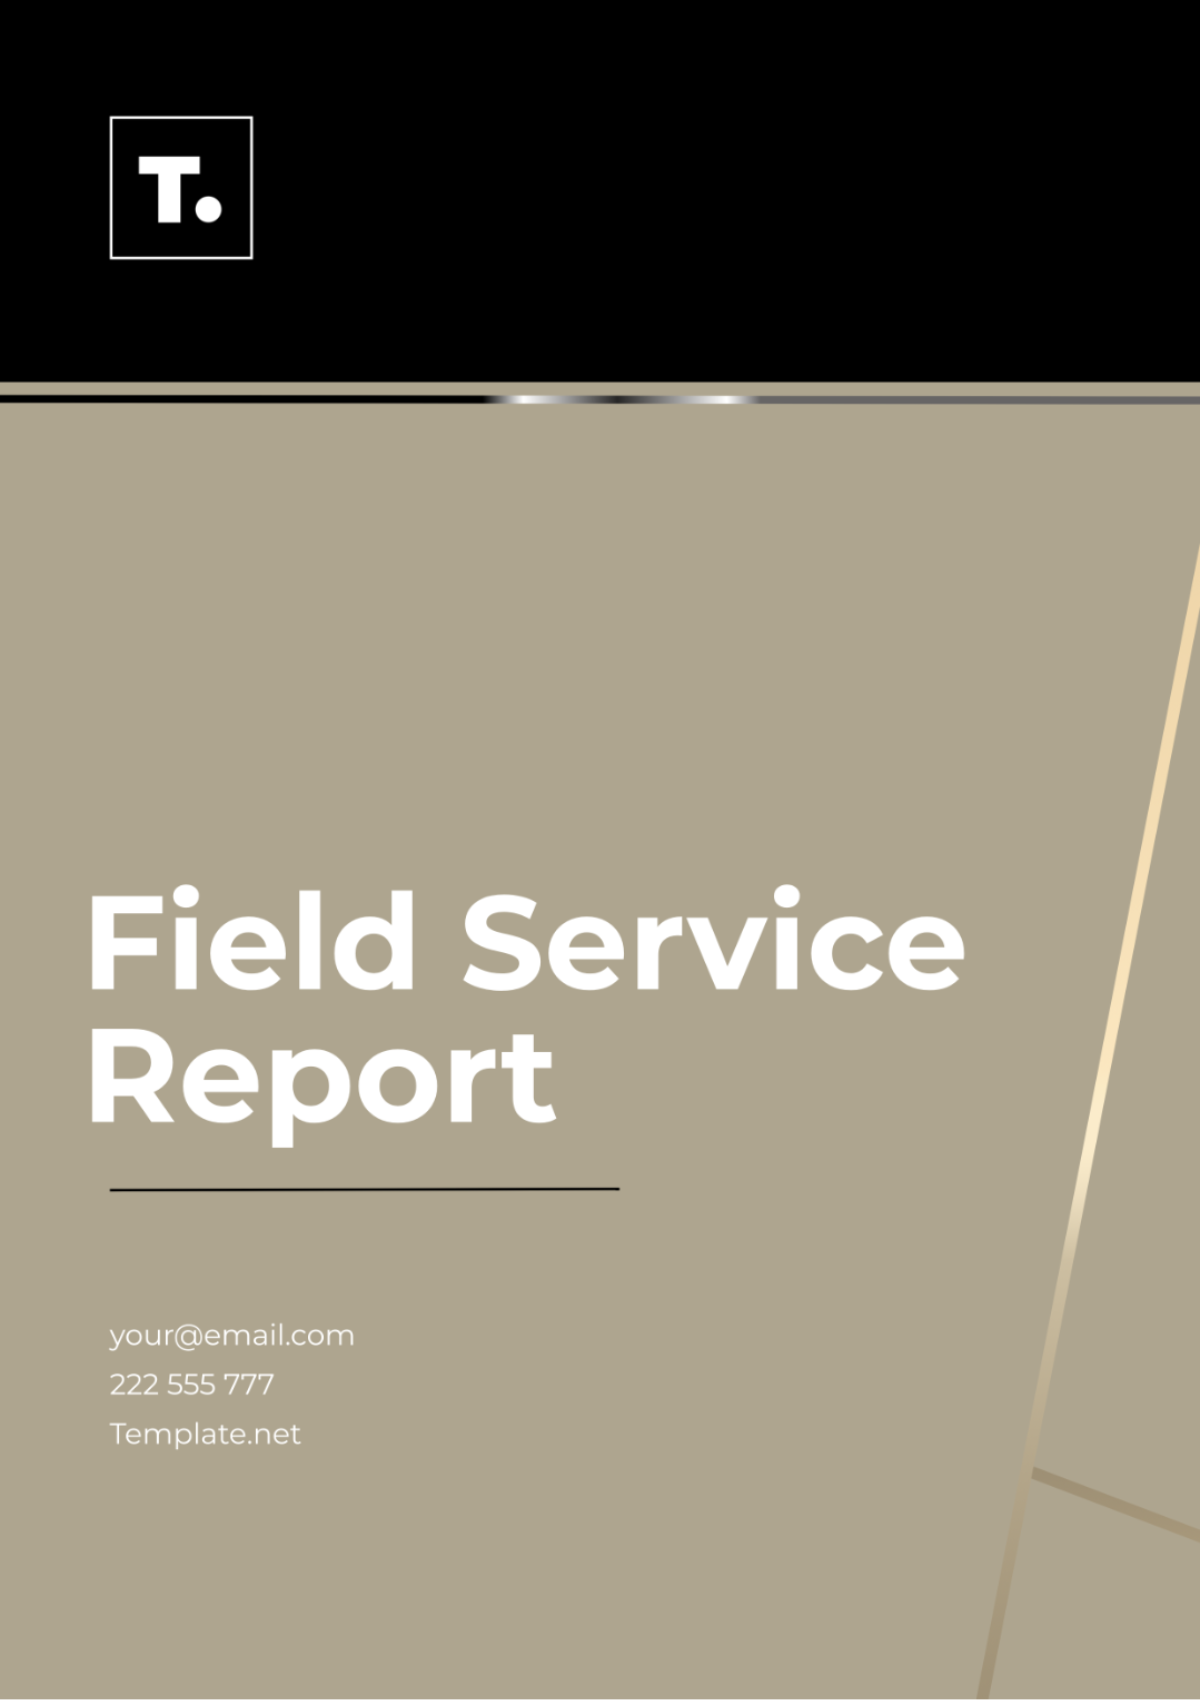 Field Service Report Template